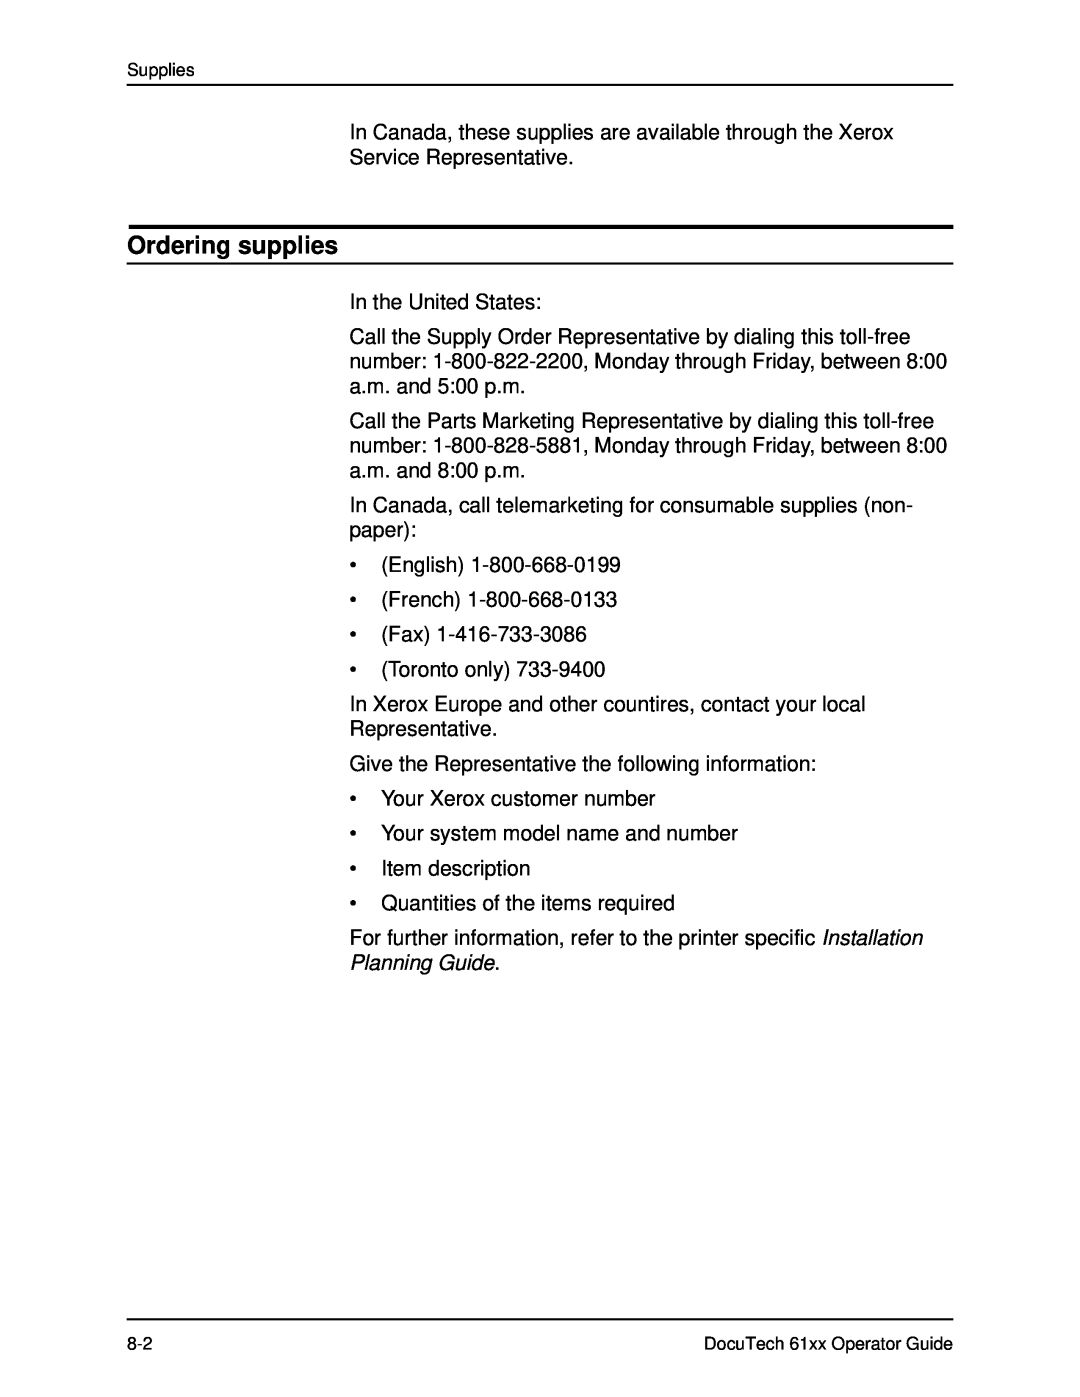 Xerox 61xx manual Ordering supplies, Planning Guide 